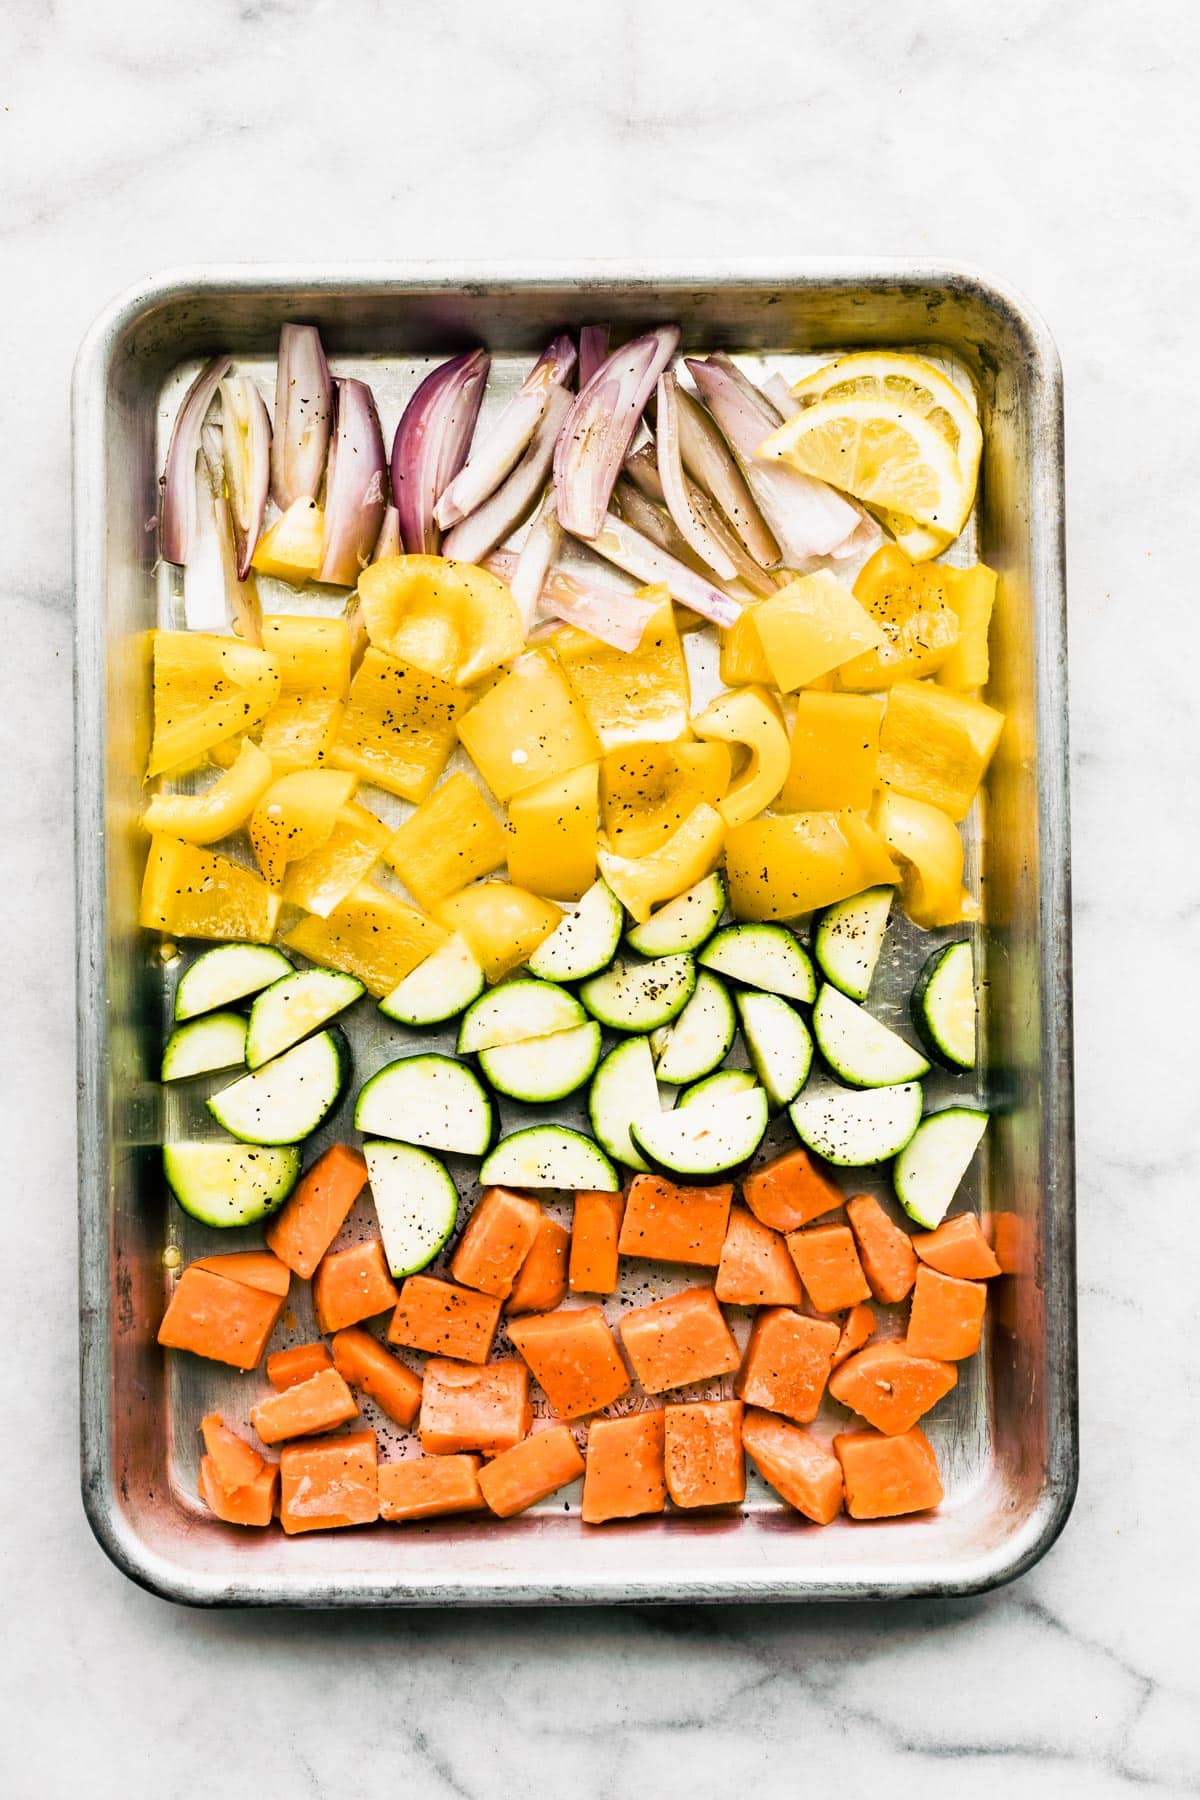 A sheet pan of raw cut up veggies.